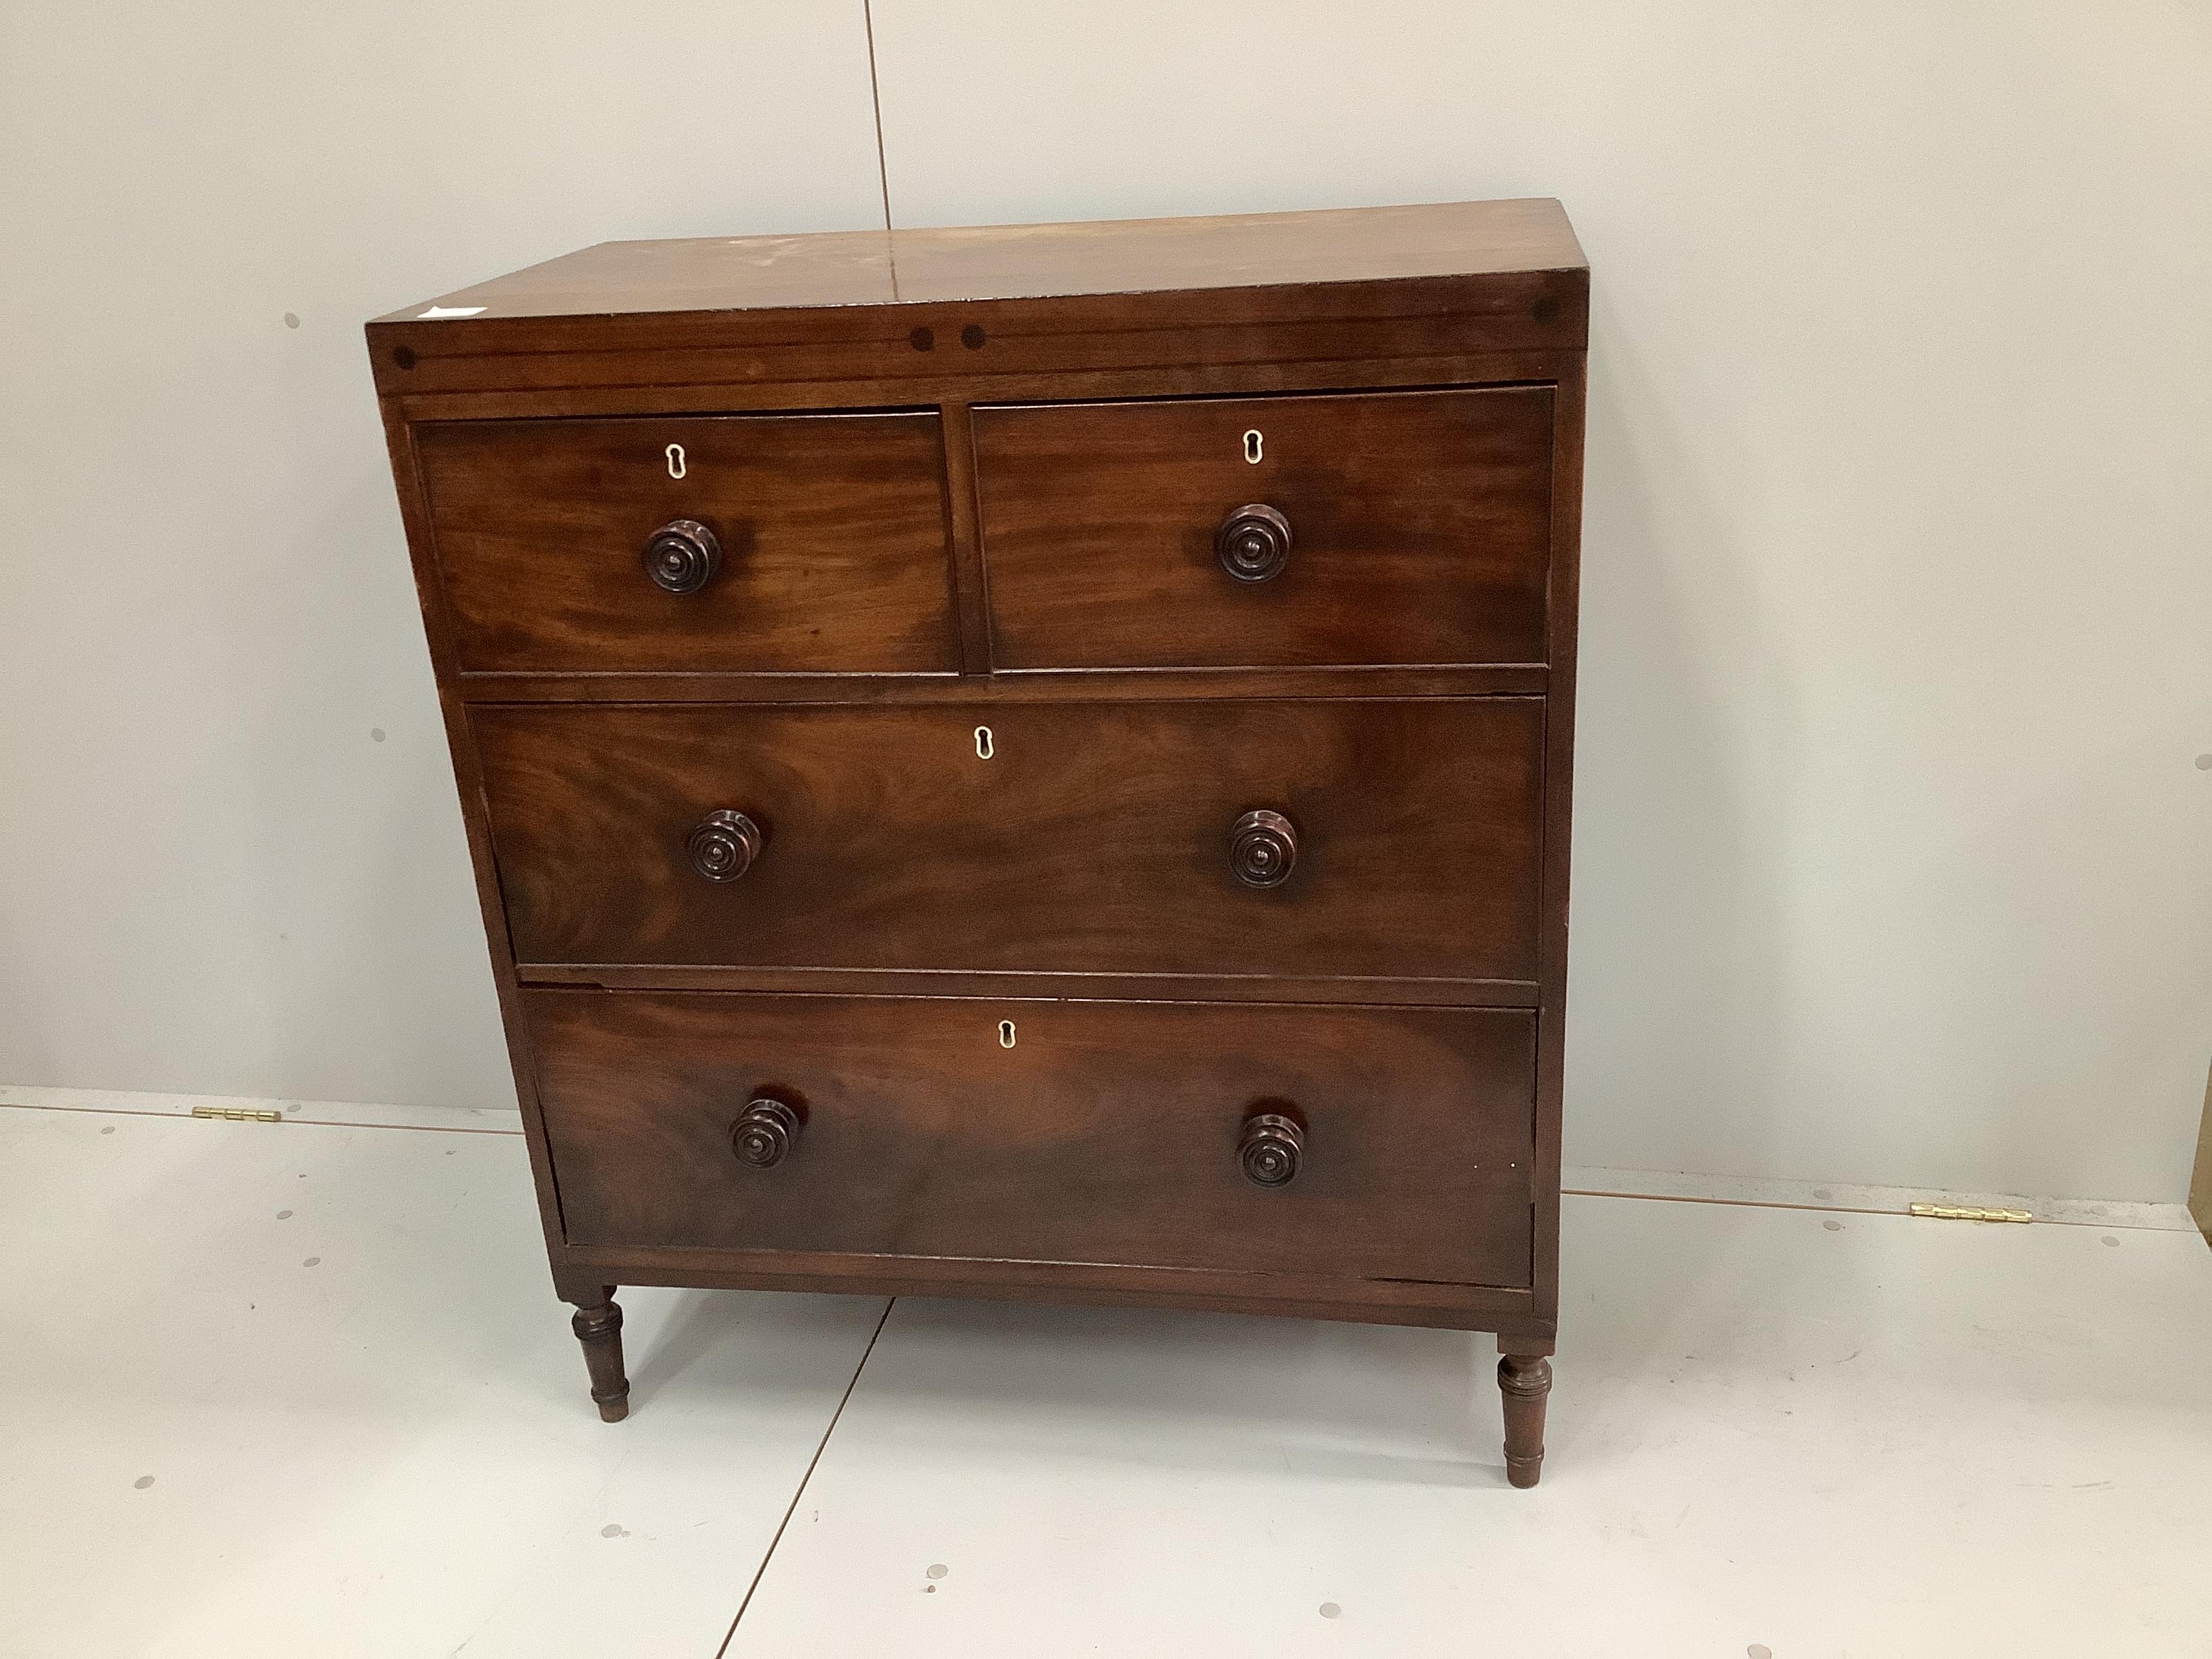 A small Regency mahogany four drawer chest, width 84cm, depth 45cm, height 96cm